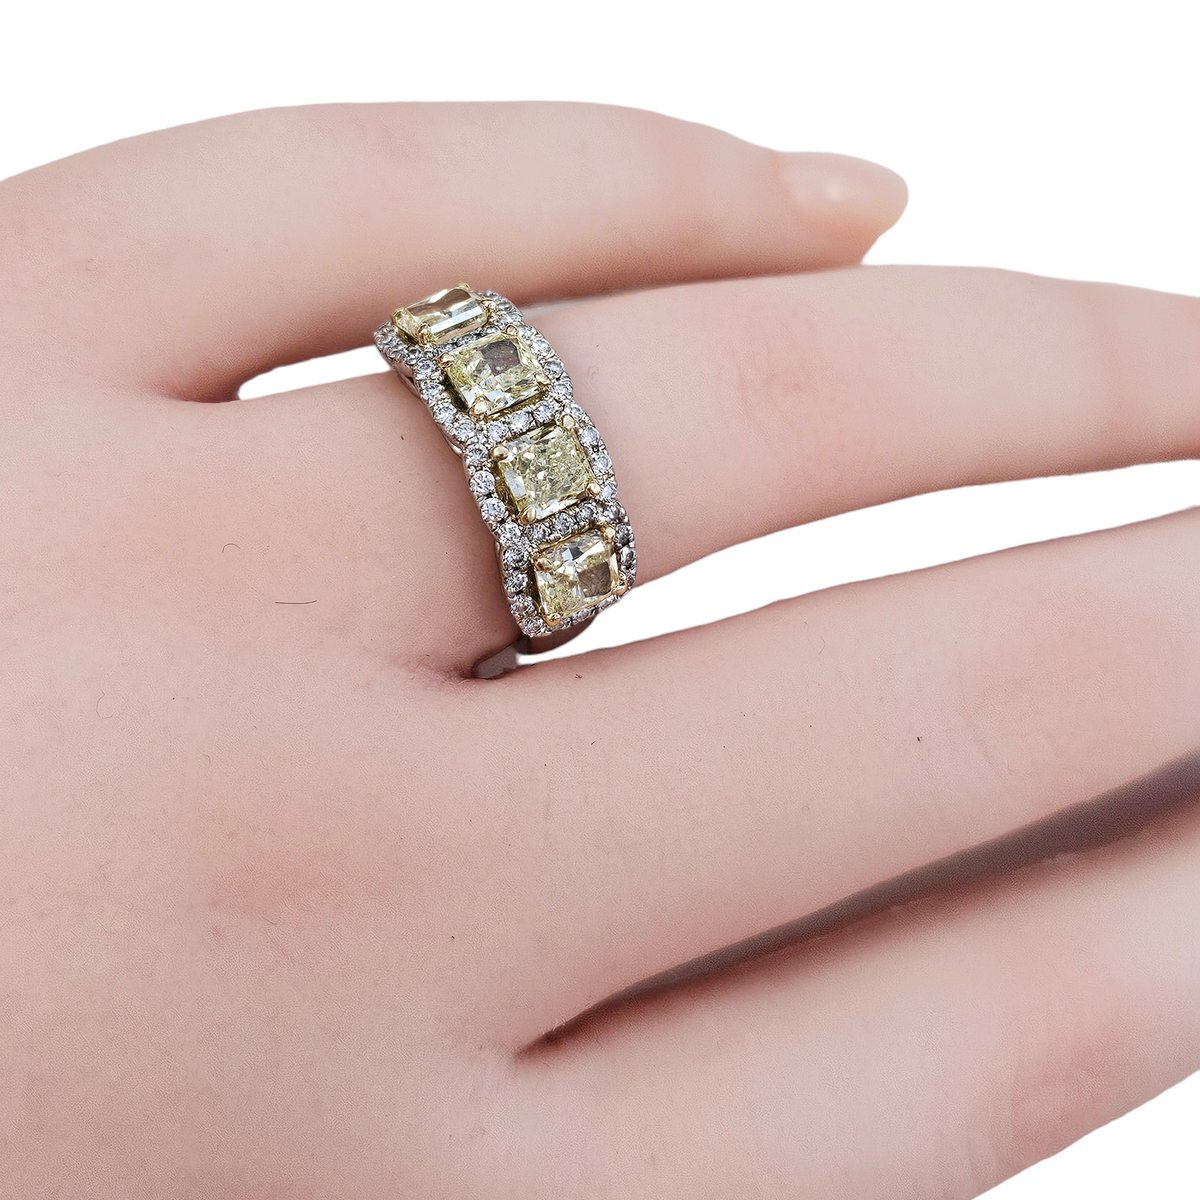 Diamond Ring, 4 Yellow Radiant Cut Diamonds, Total Carats 2.20, surrounded by 47 Round Cut Diamonds, 0.45 Carats Platinum Ring